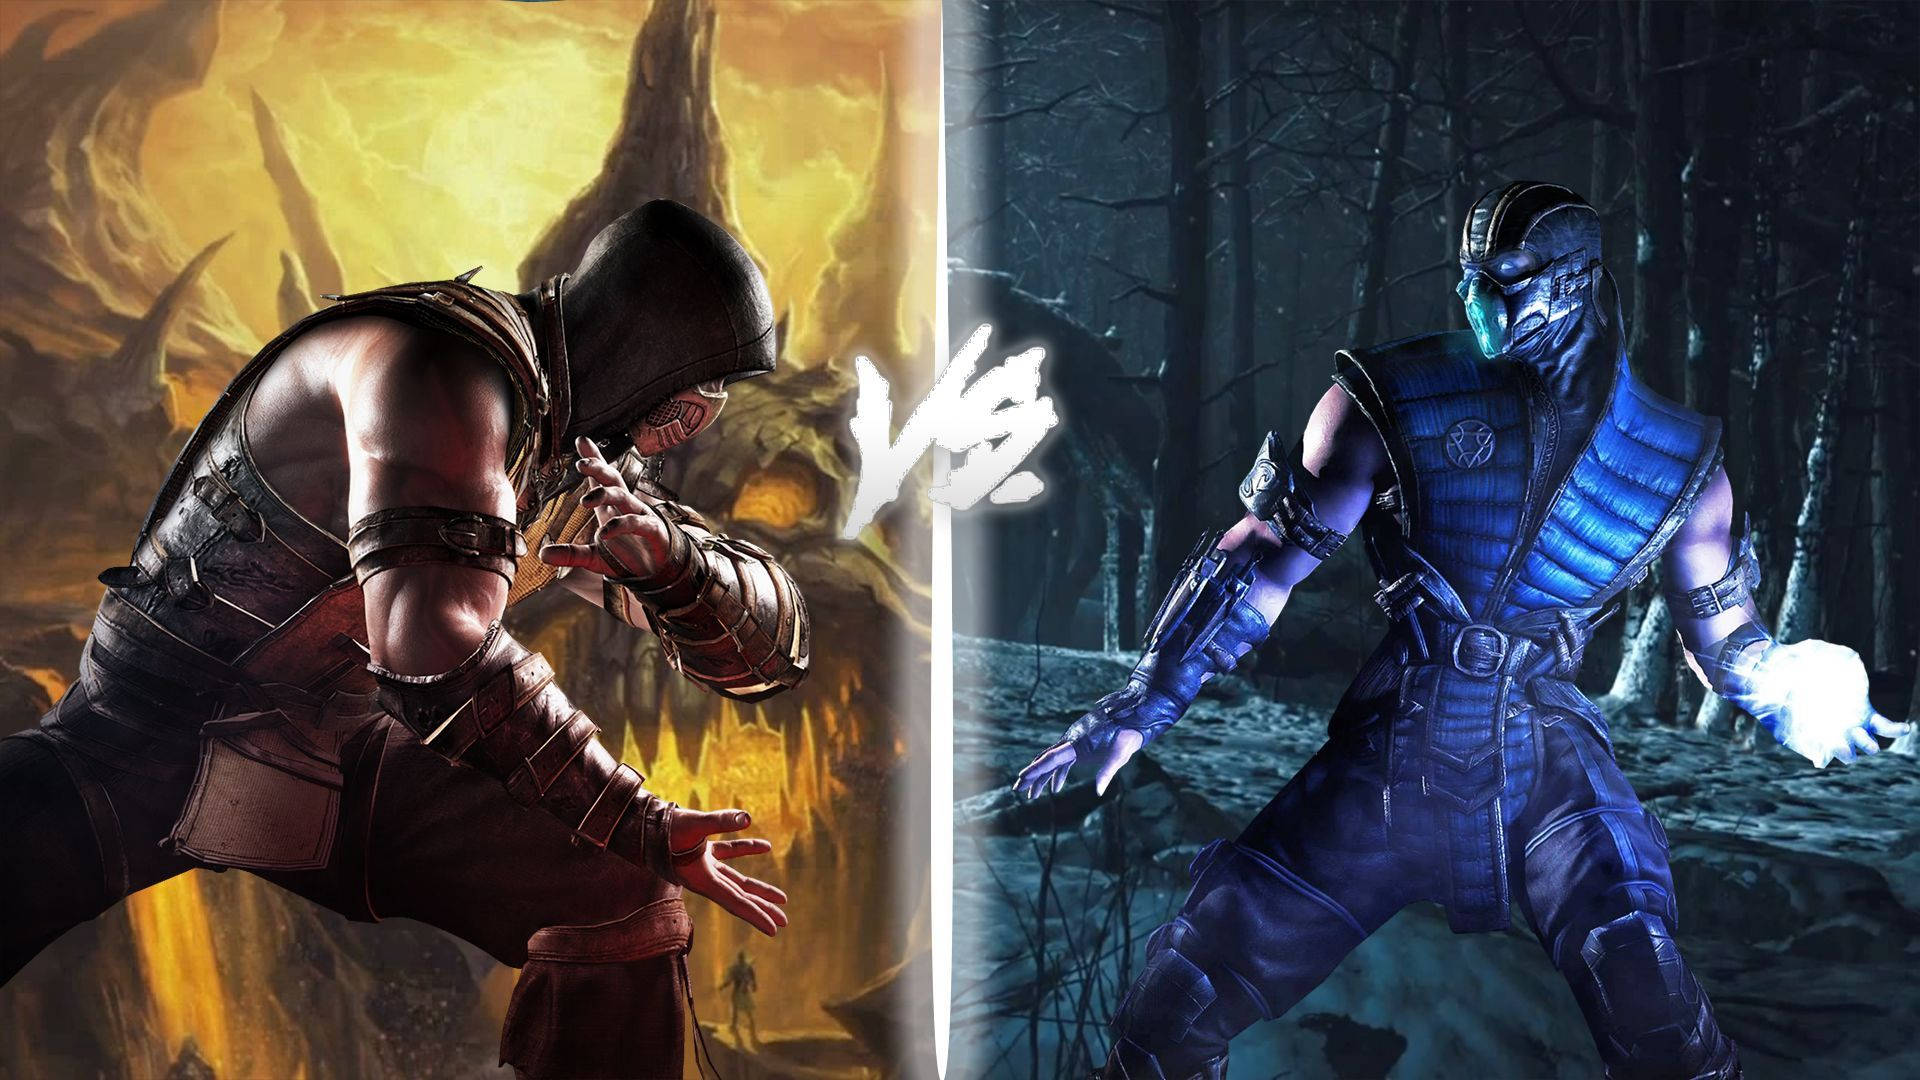 Mortal Kombat Scorpion Vs Sub Zero Battle Position